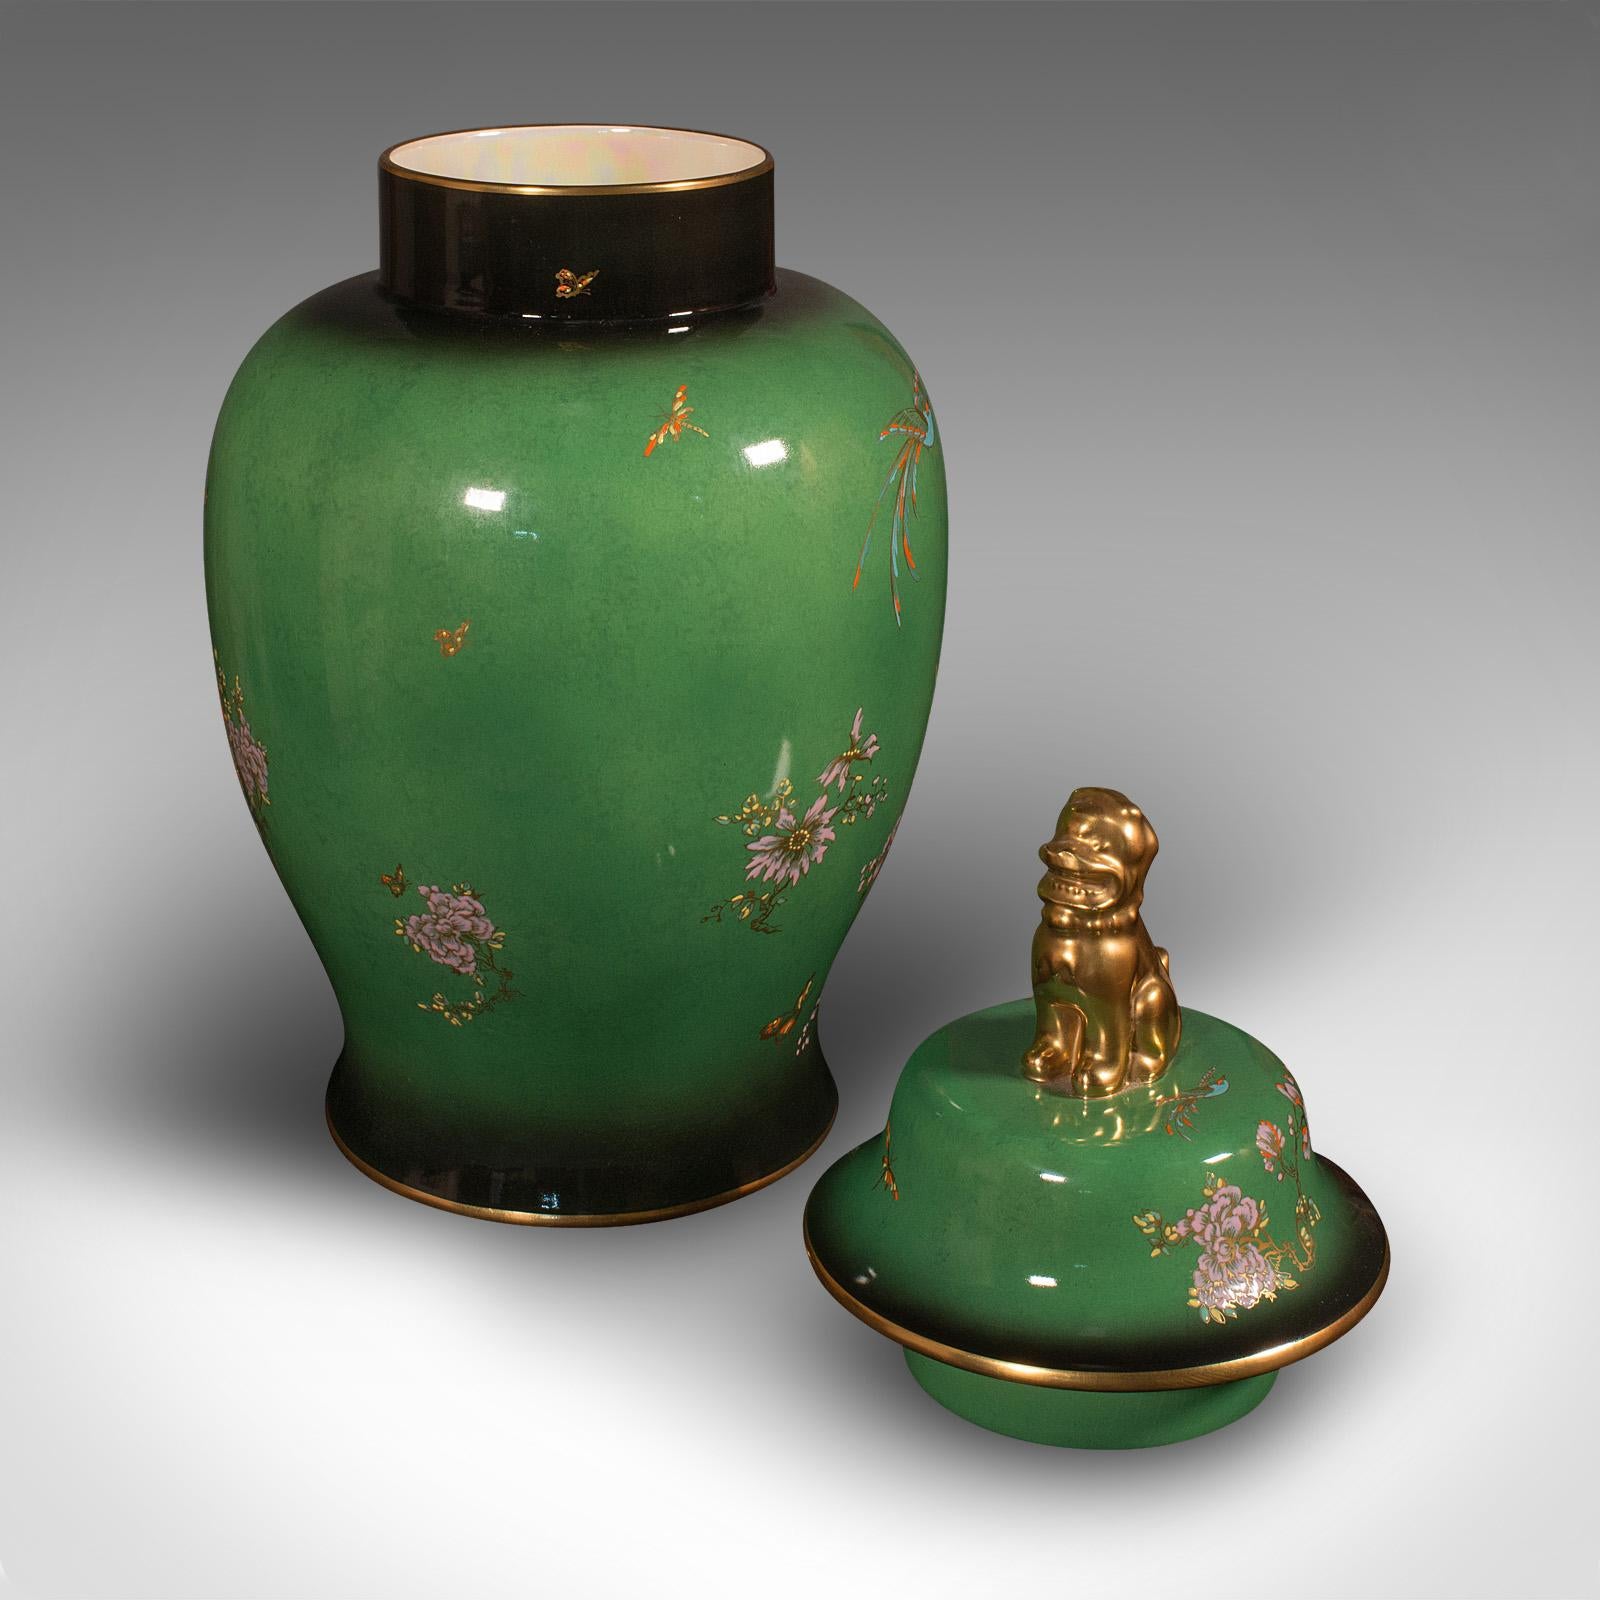 Large Vintage Decorative Temple Urn, English, Ceramic, Vase, Mid-20th Century For Sale 2